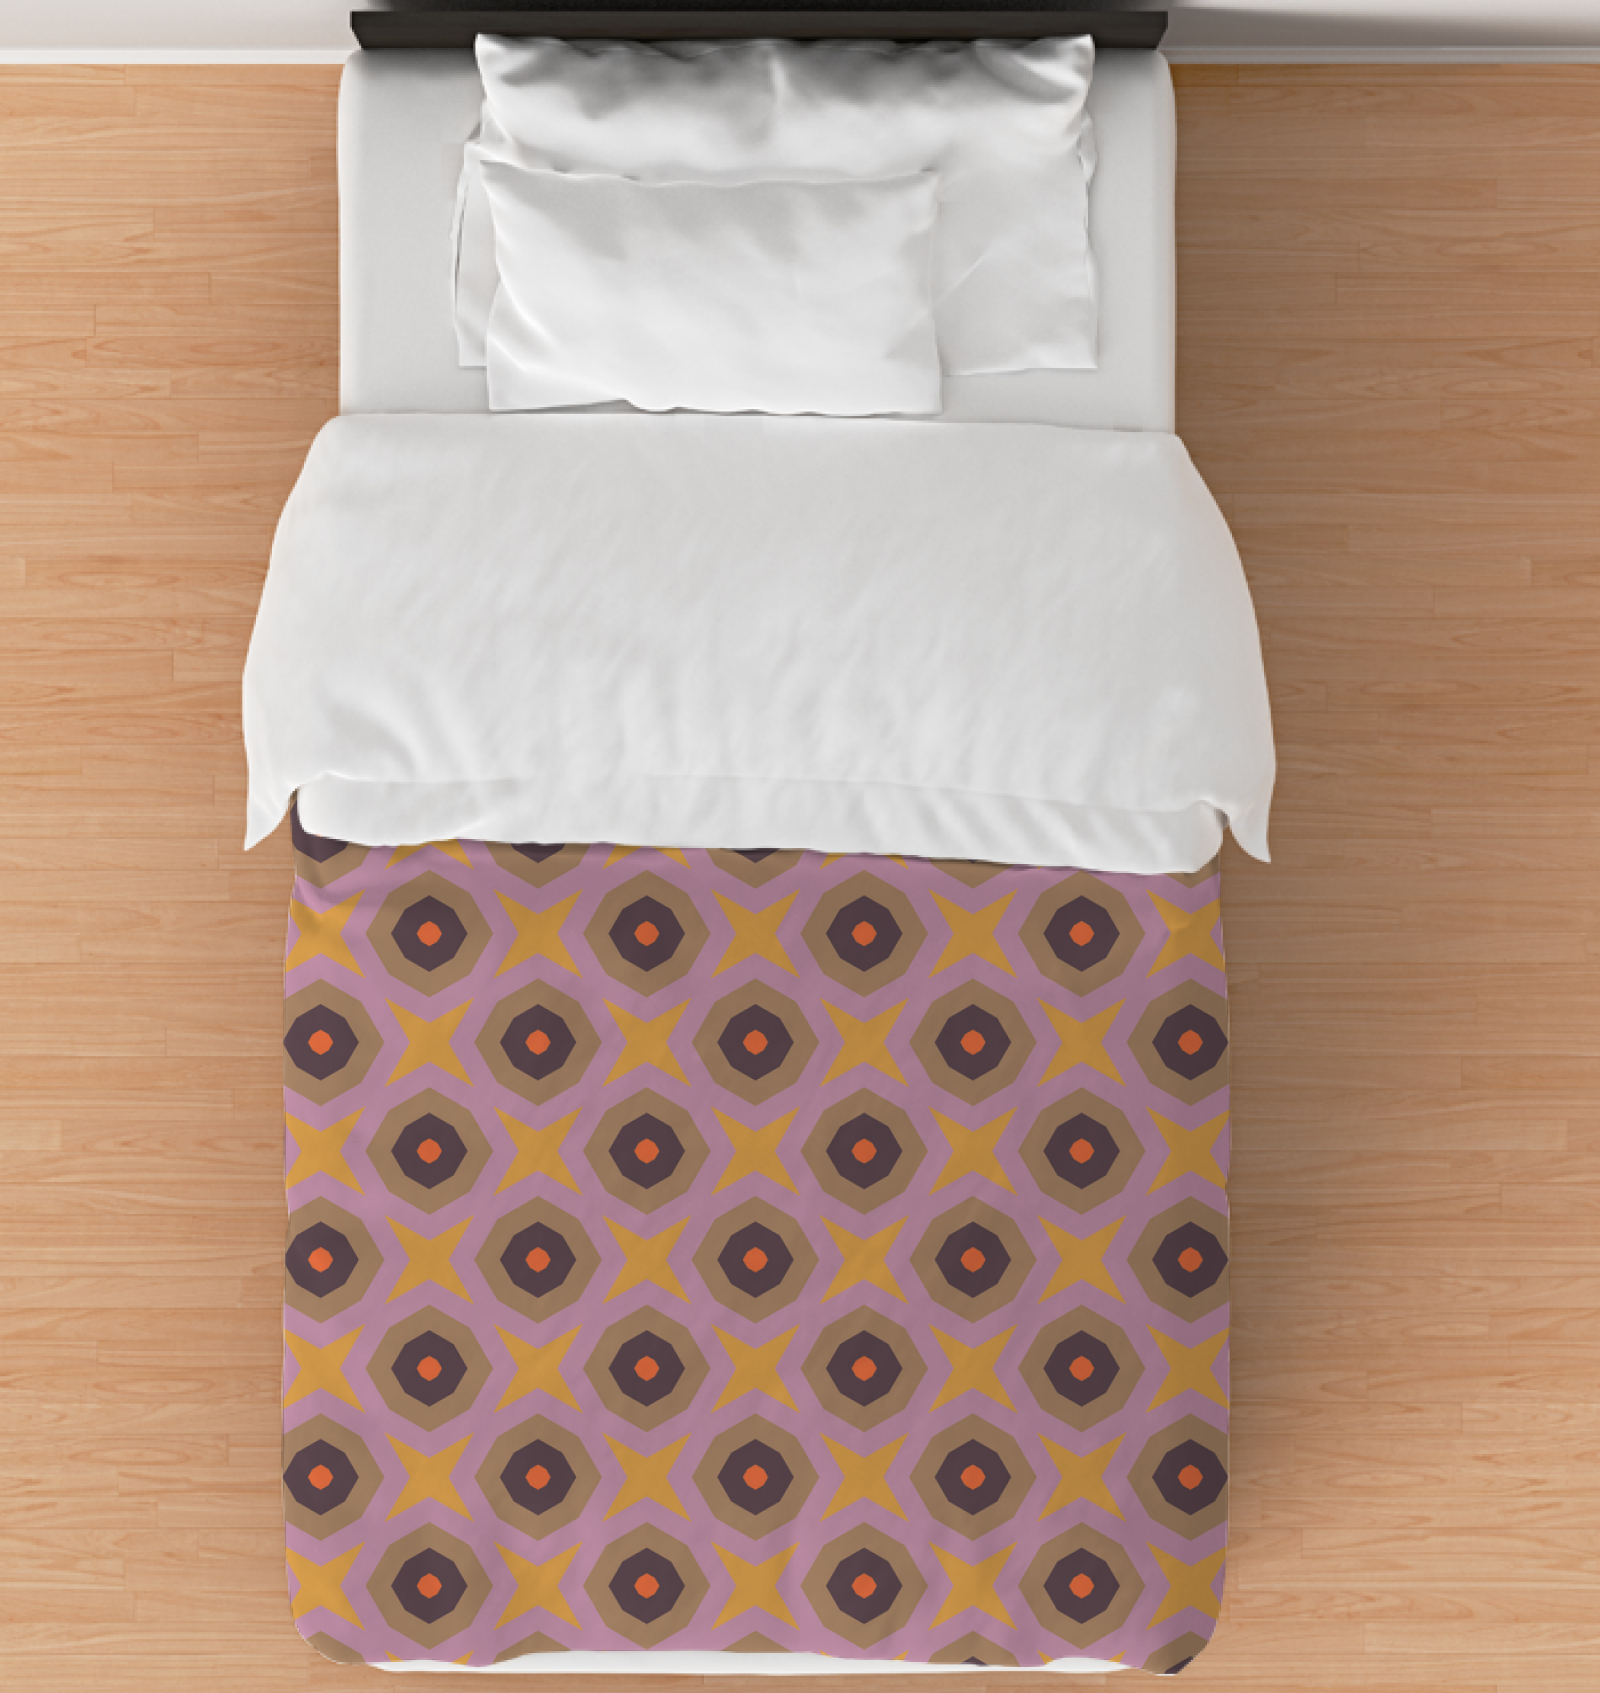 Elegant Mandala Magic Comforter with intricate design for peaceful sleep